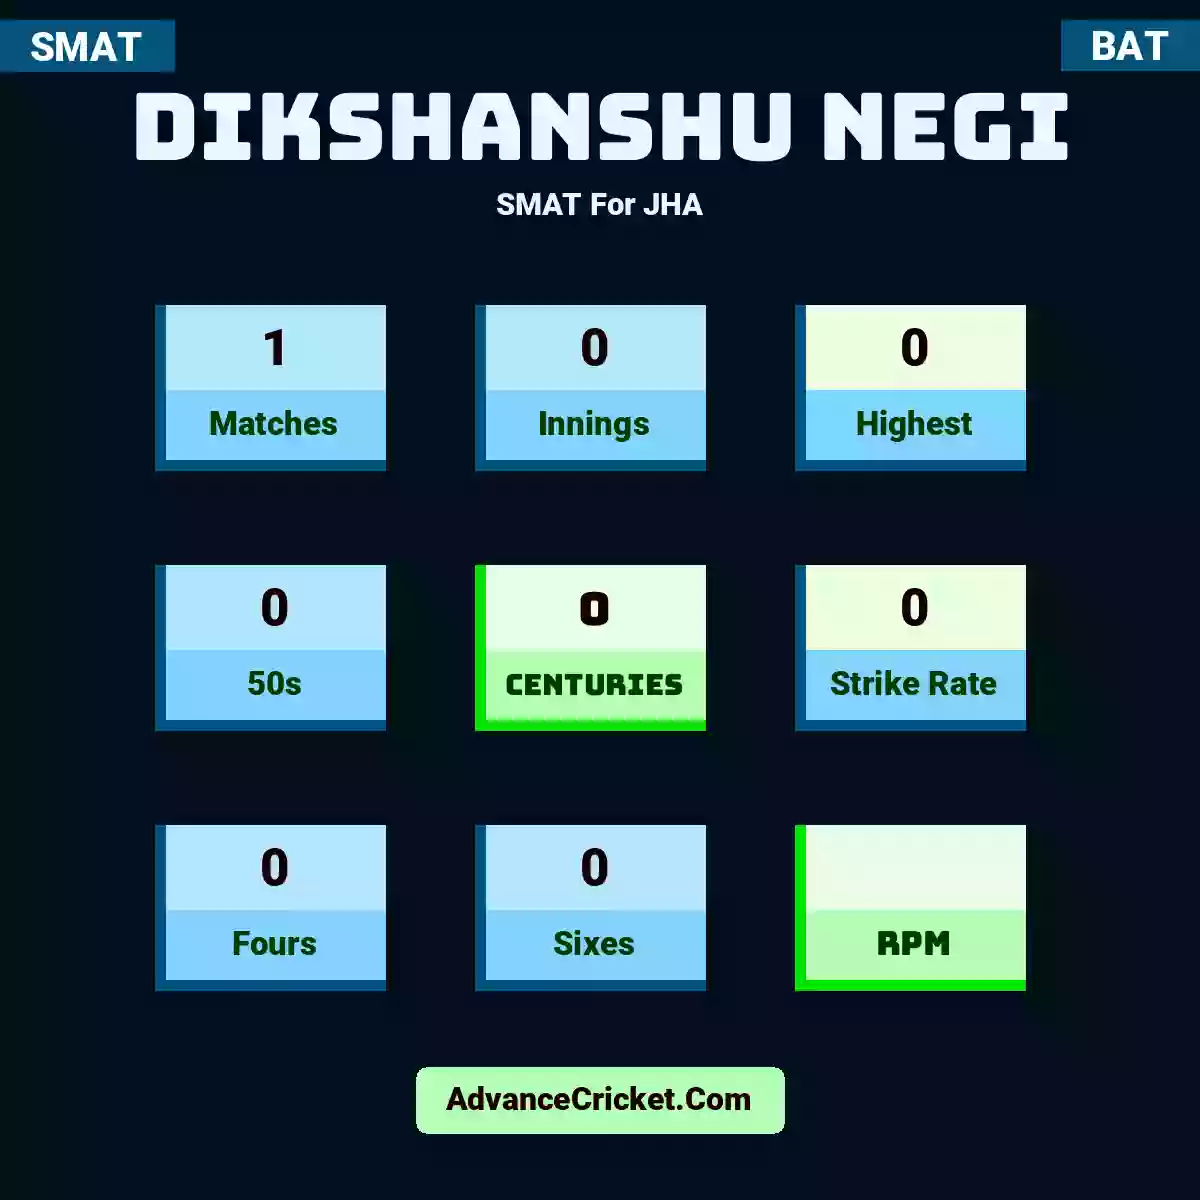 Dikshanshu Negi SMAT  For JHA, Dikshanshu Negi played 1 matches, scored 0 runs as highest, 0 half-centuries, and 0 centuries, with a strike rate of 0. D.Negi hit 0 fours and 0 sixes.